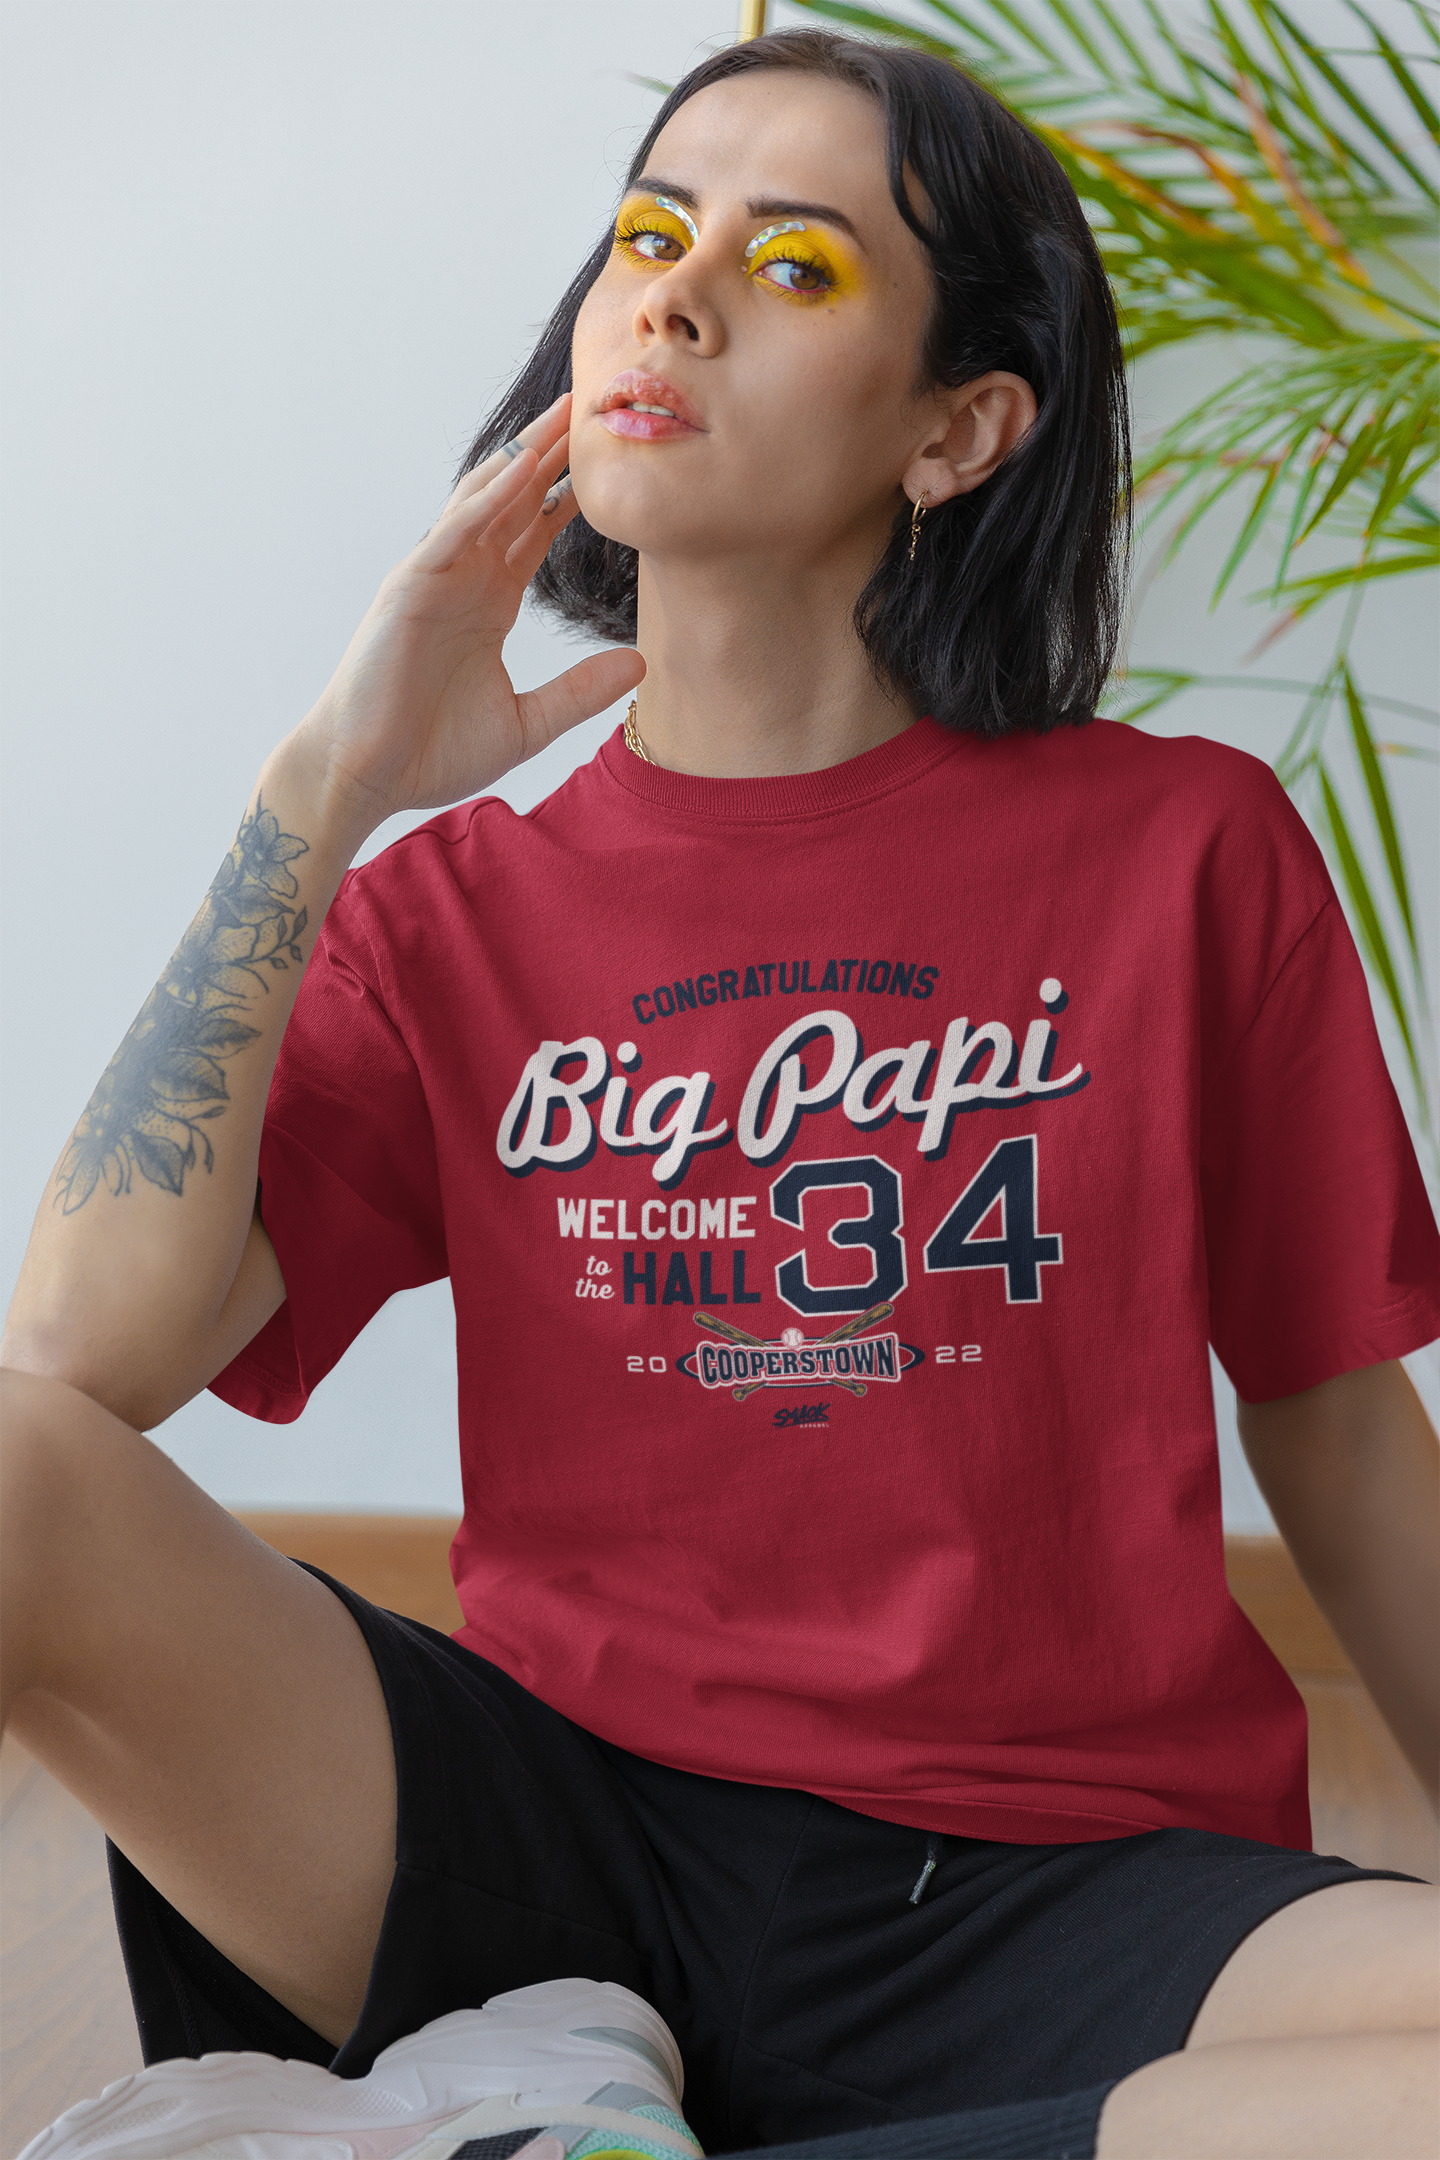 Big Papi Tshirt I Love My Papi T Shirt L I Love My Papi T Shirt L